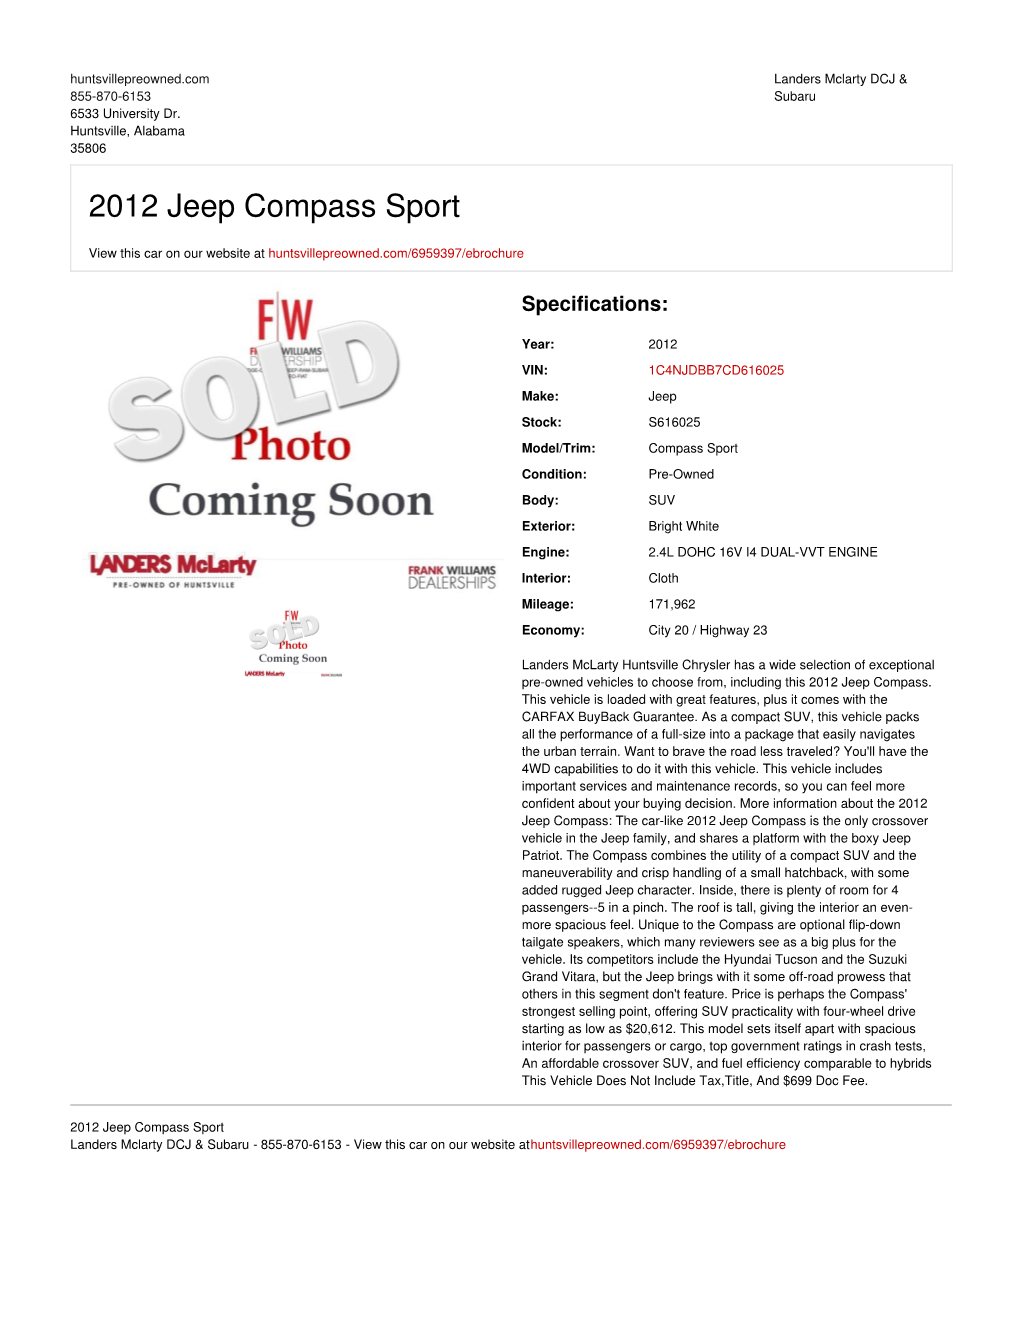 2012 Jeep Compass Sport | Huntsville, Alabama | Landers Mclarty